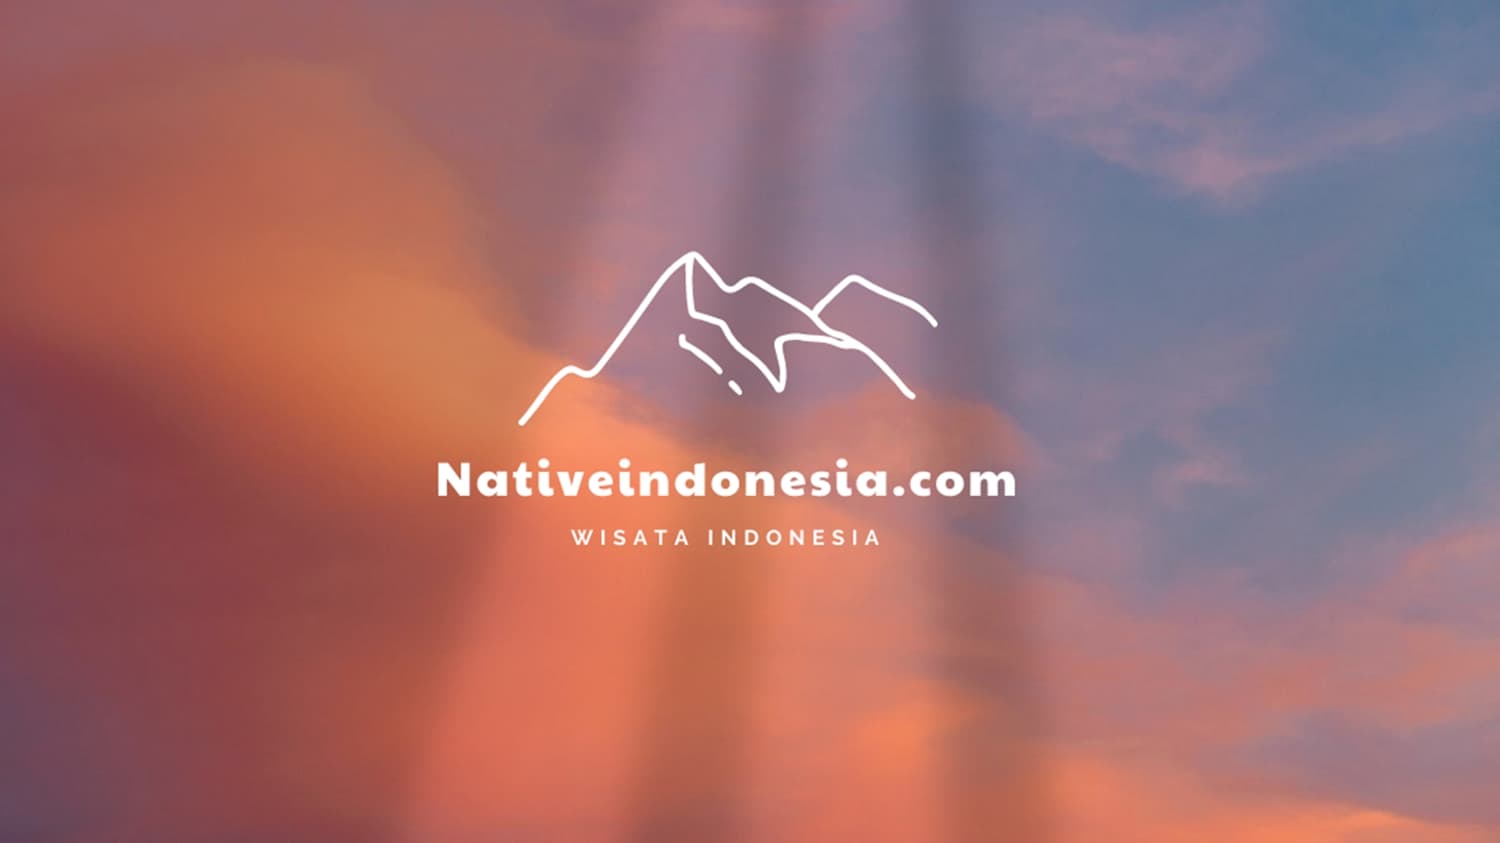 wisata indonesia hd